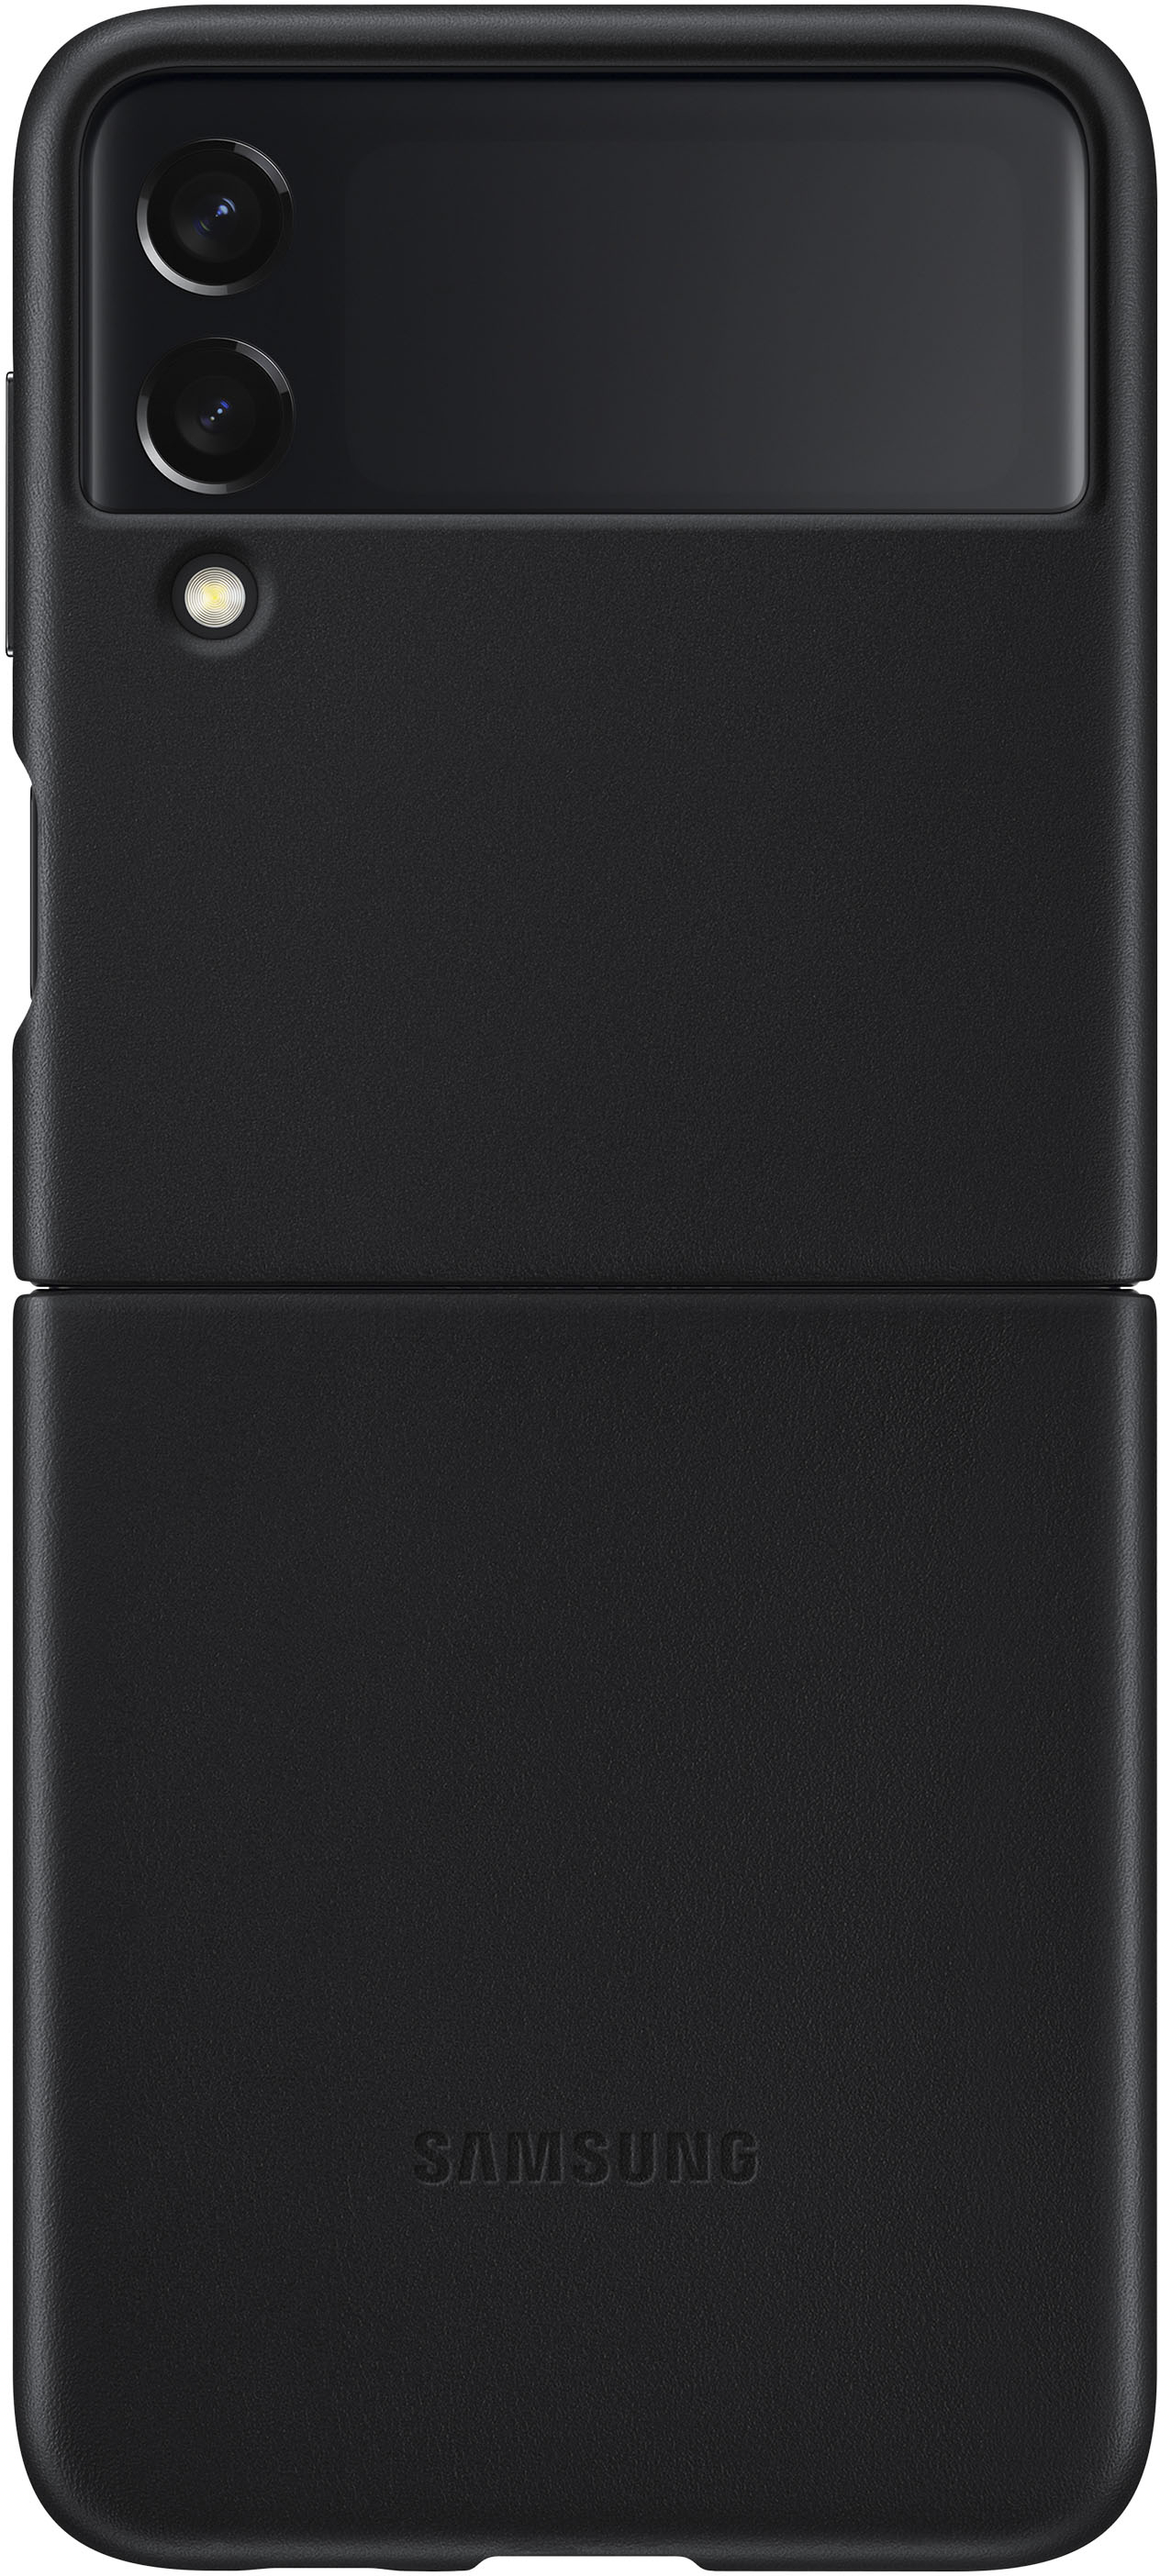 MICHAEL KORS LOGO BLACK Samsung Galaxy Z Flip 3 Case Cover